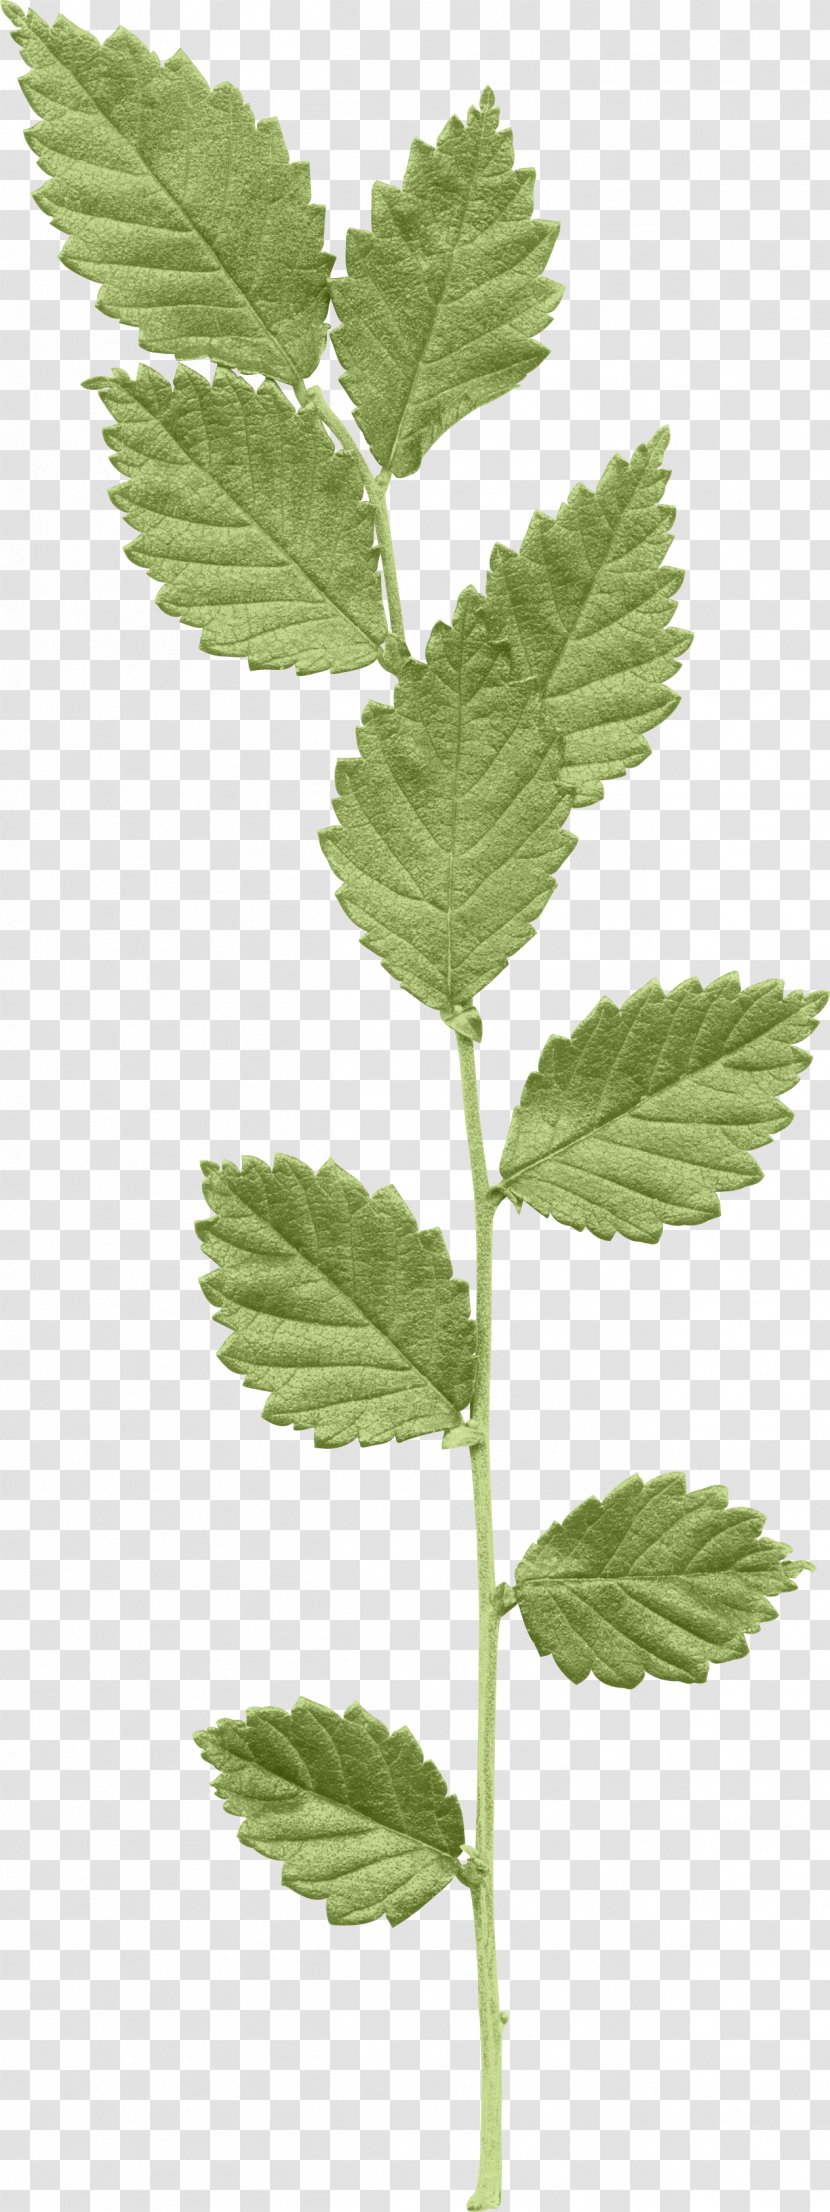 Herbalism Scrapbooking Supercalifragilisticexpialidocious Plant Stem - Green Leaves Transparent PNG